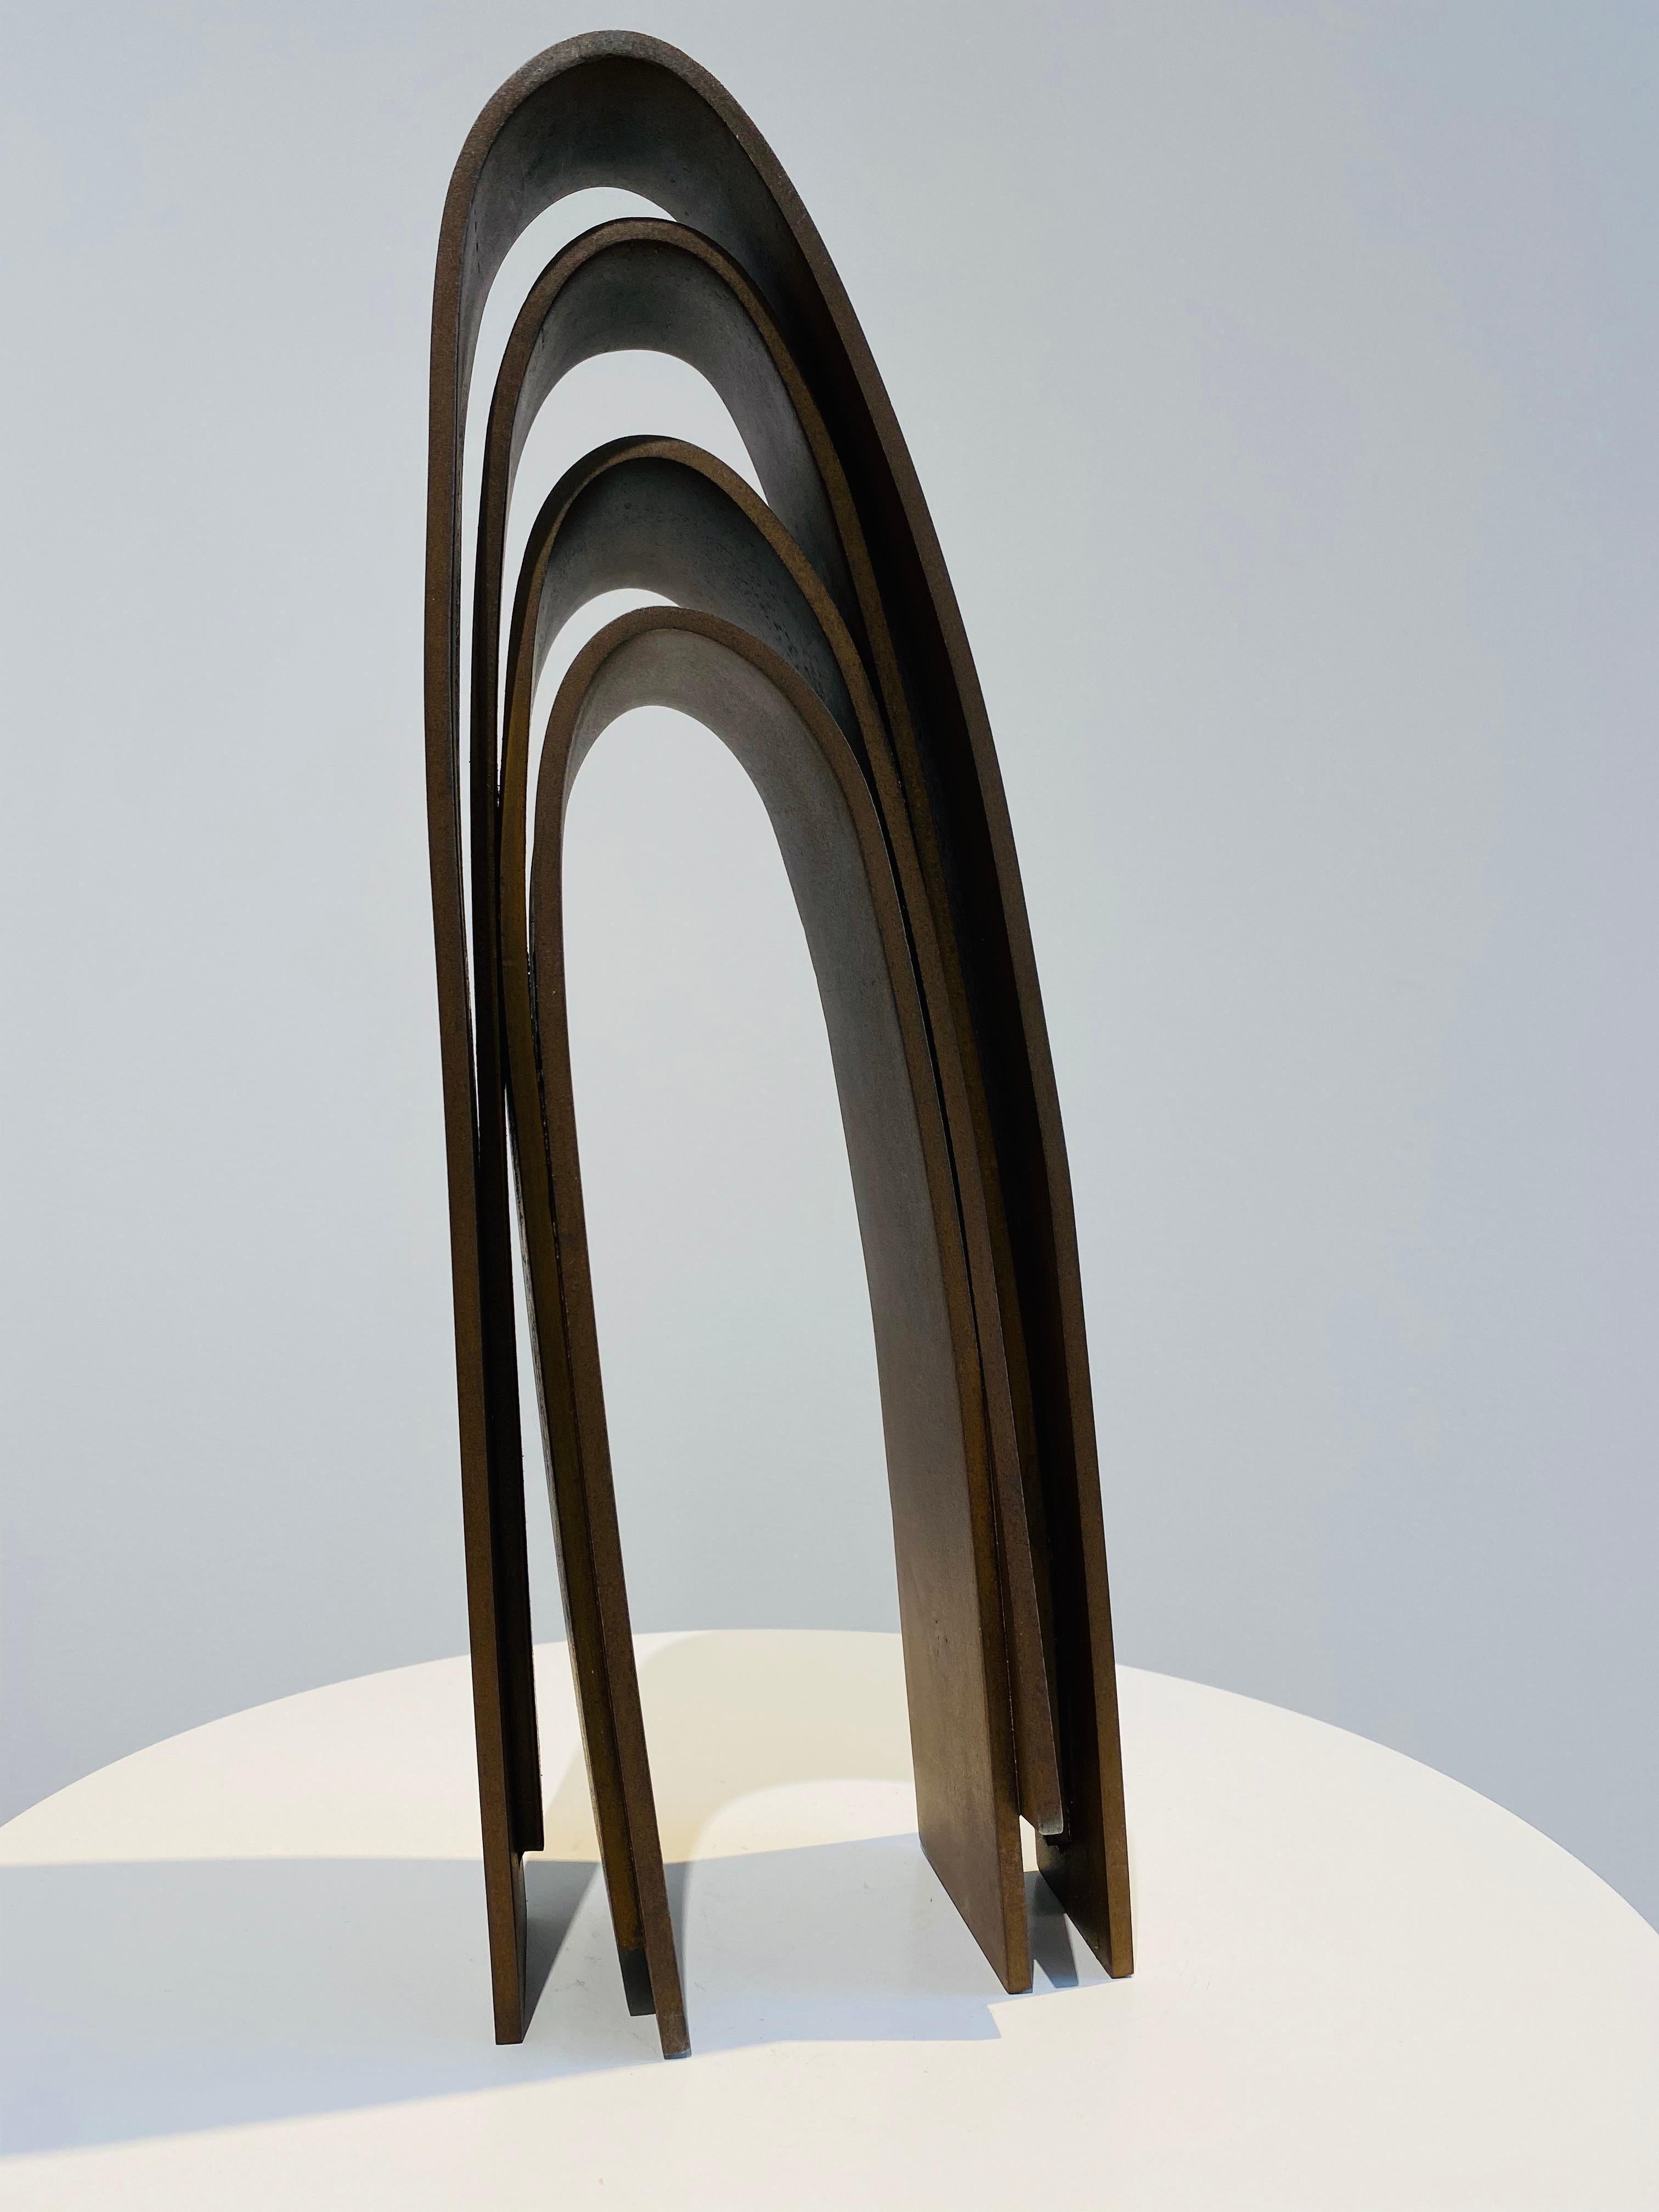 Honoré, 2017, corten steel sculpture, abstract, rust, minimalism, arcs - Gray Abstract Sculpture by Etienne Viard